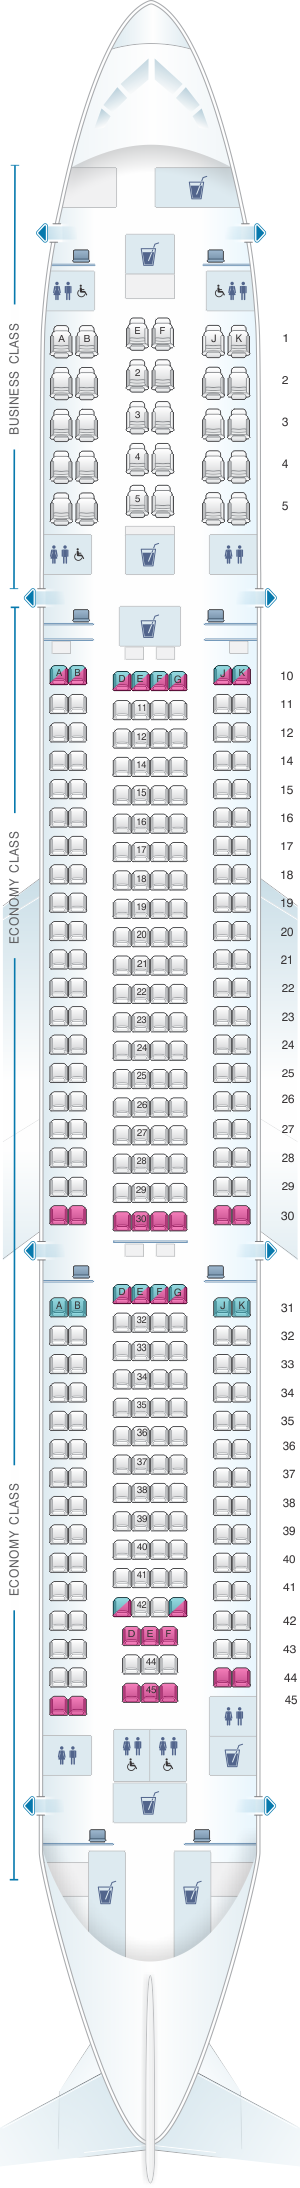 Seat Map Qatar Airways Airbus A330 300 305pax Seatmaestro